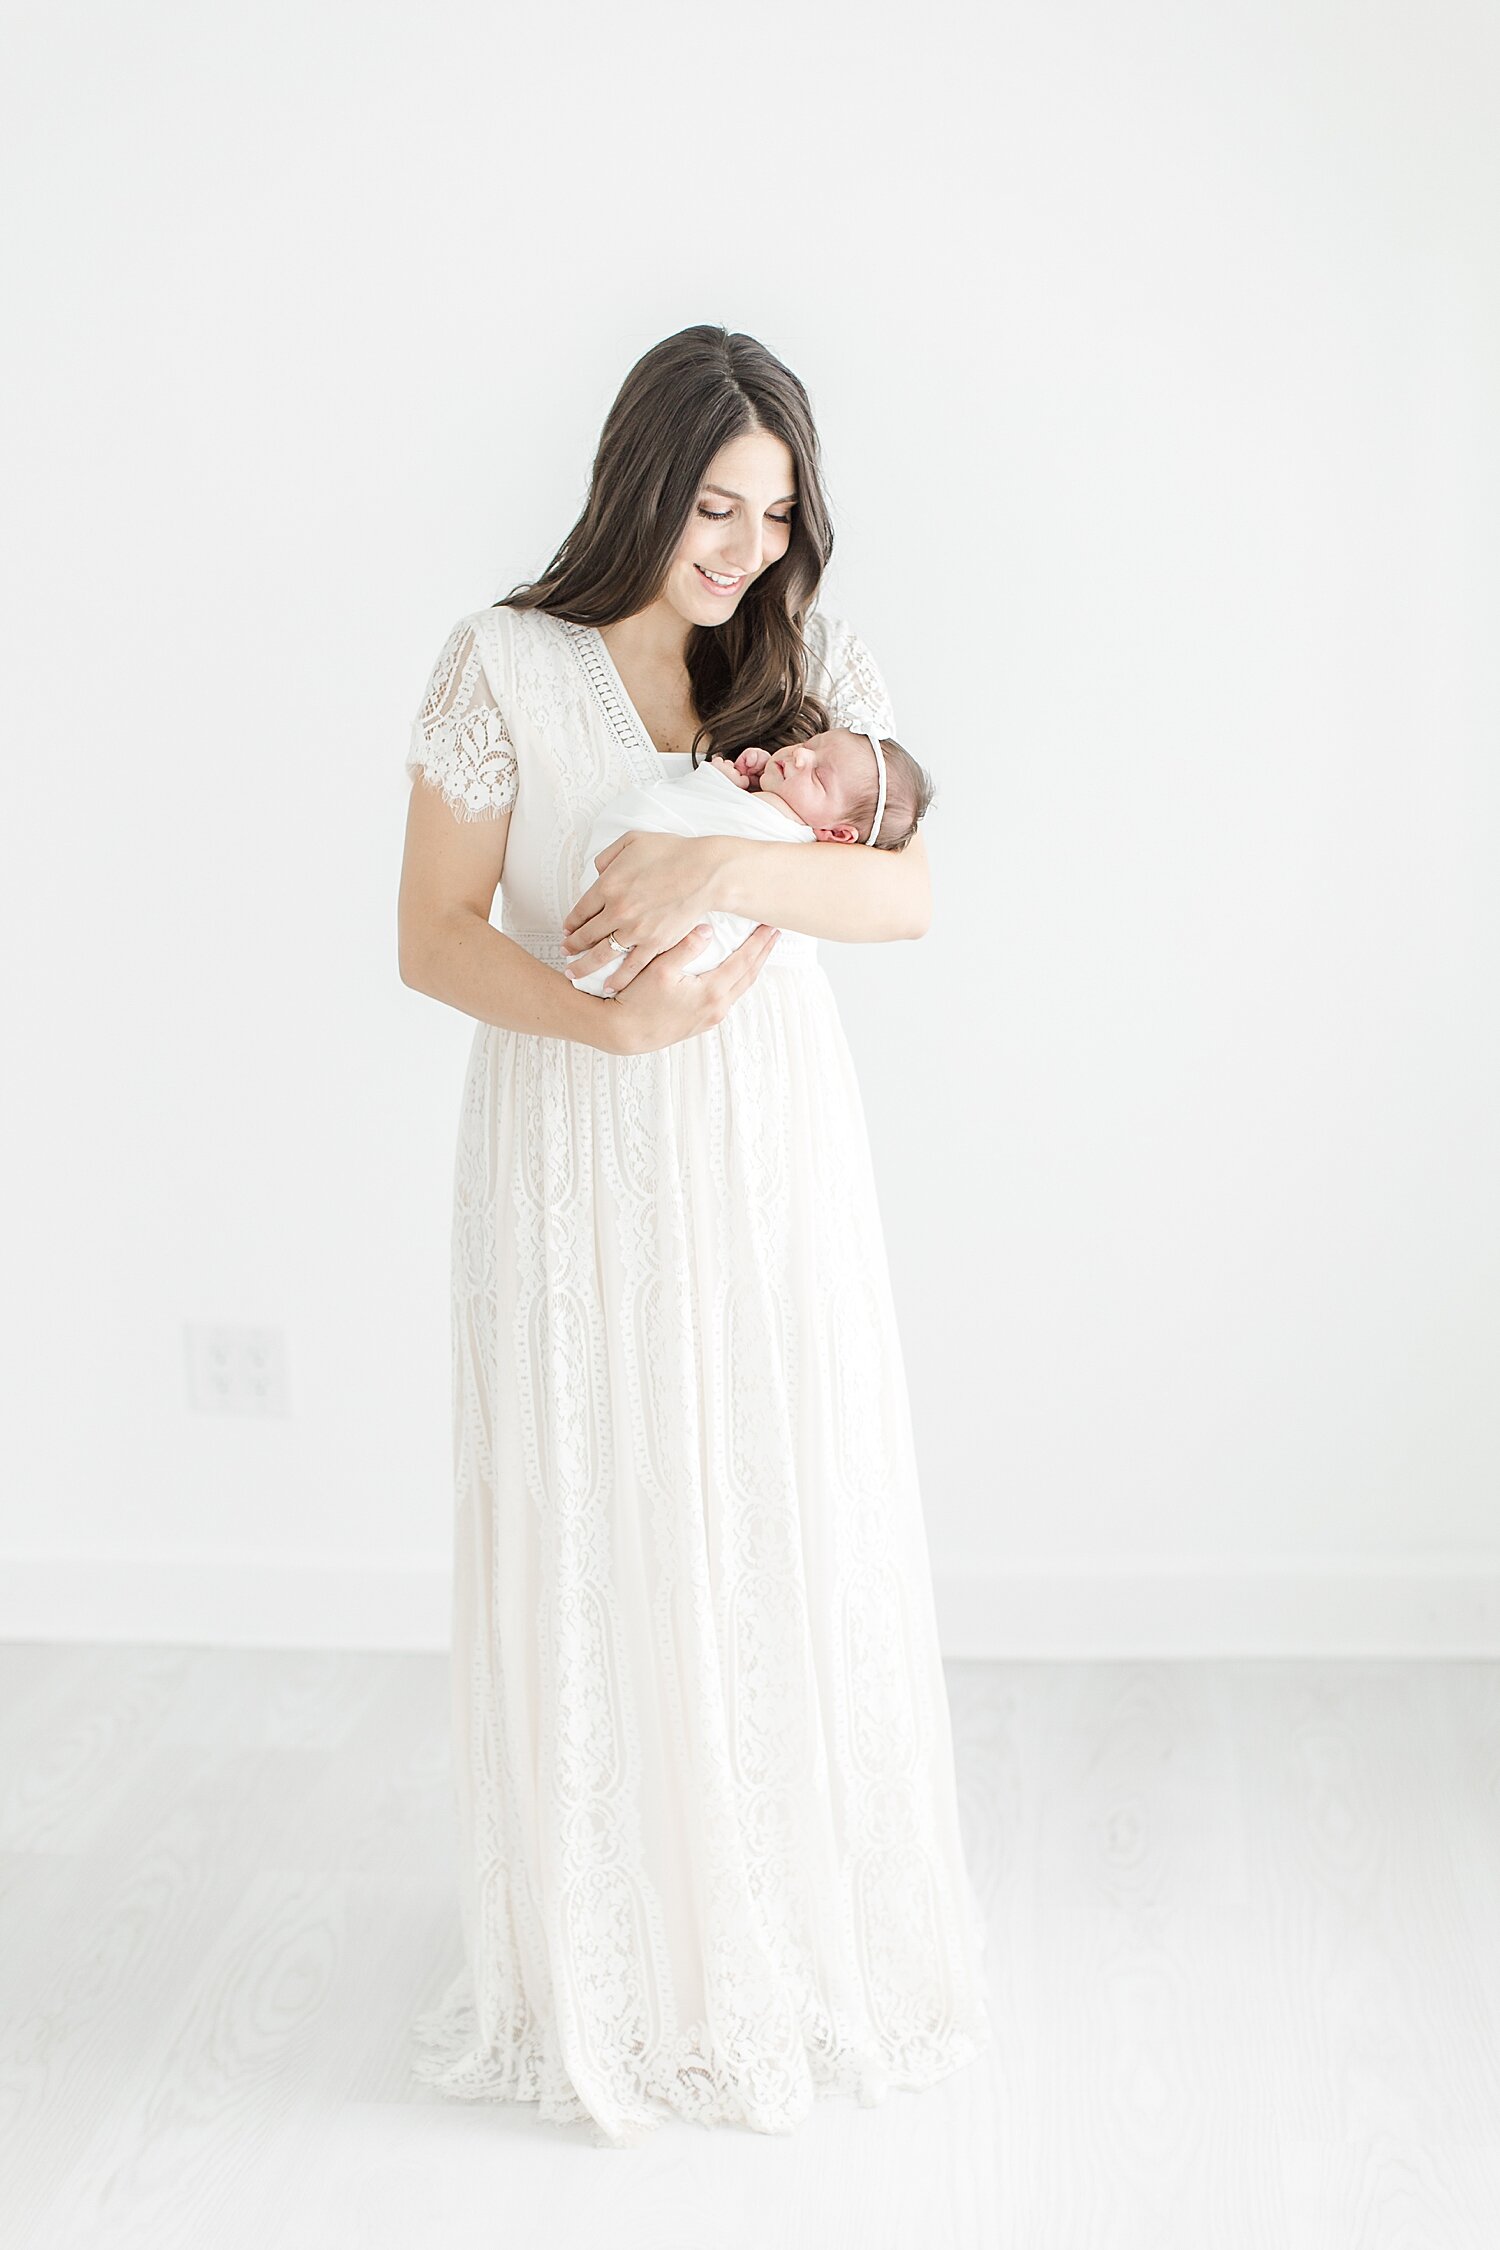 Mom and newborn baby girl | Kristin Wood Photography